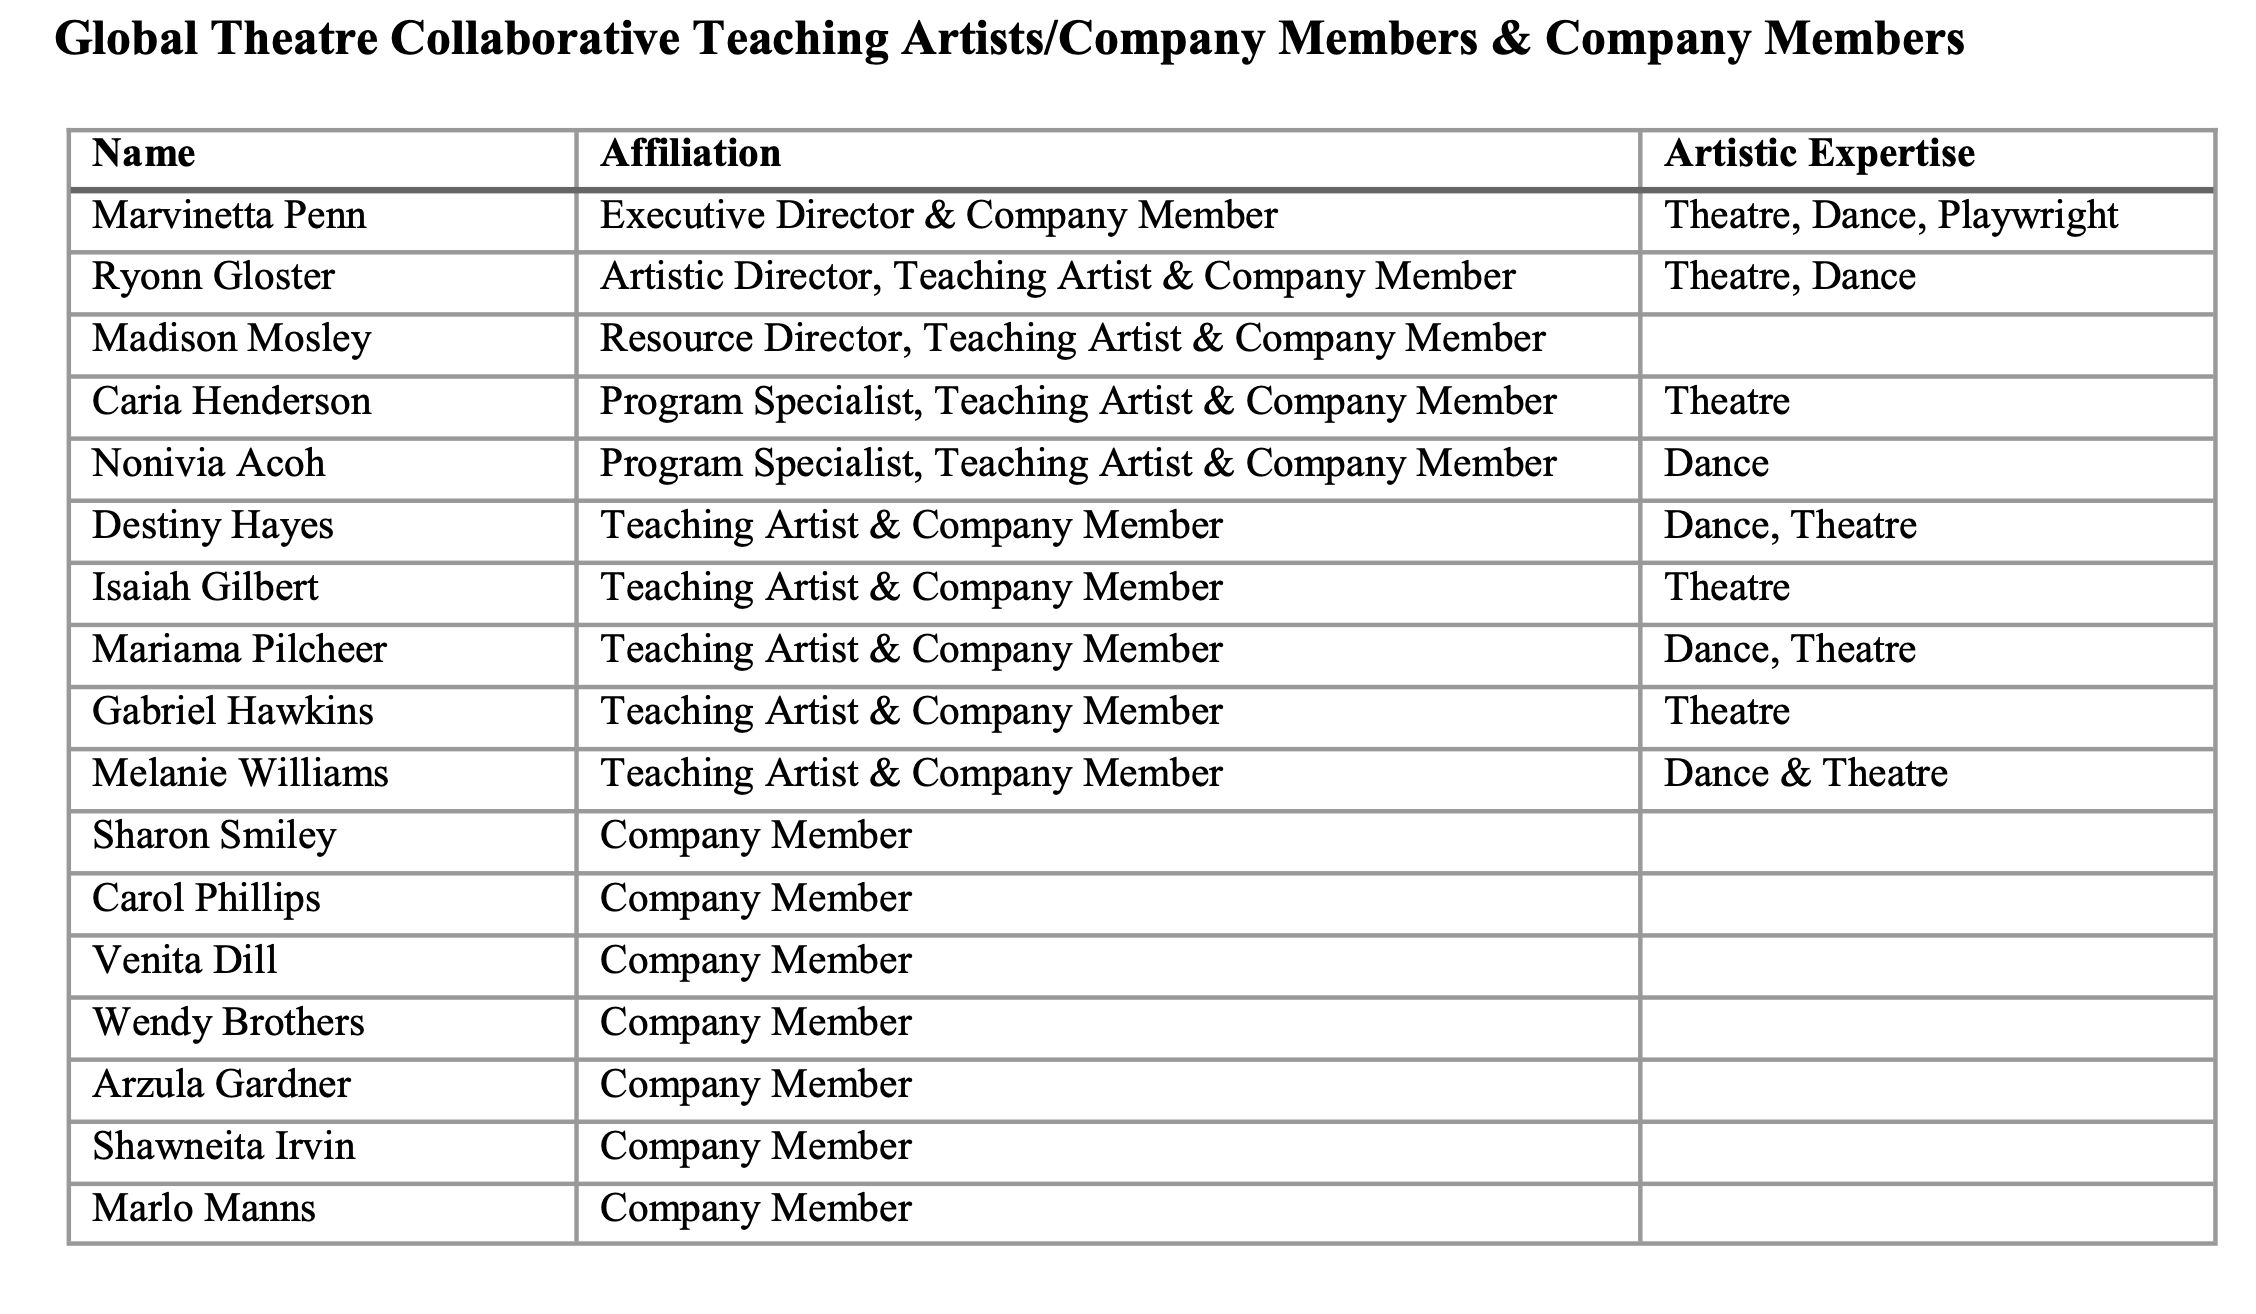 Global Theatre Collaborative Teaching Artists/Company Members & Company Members